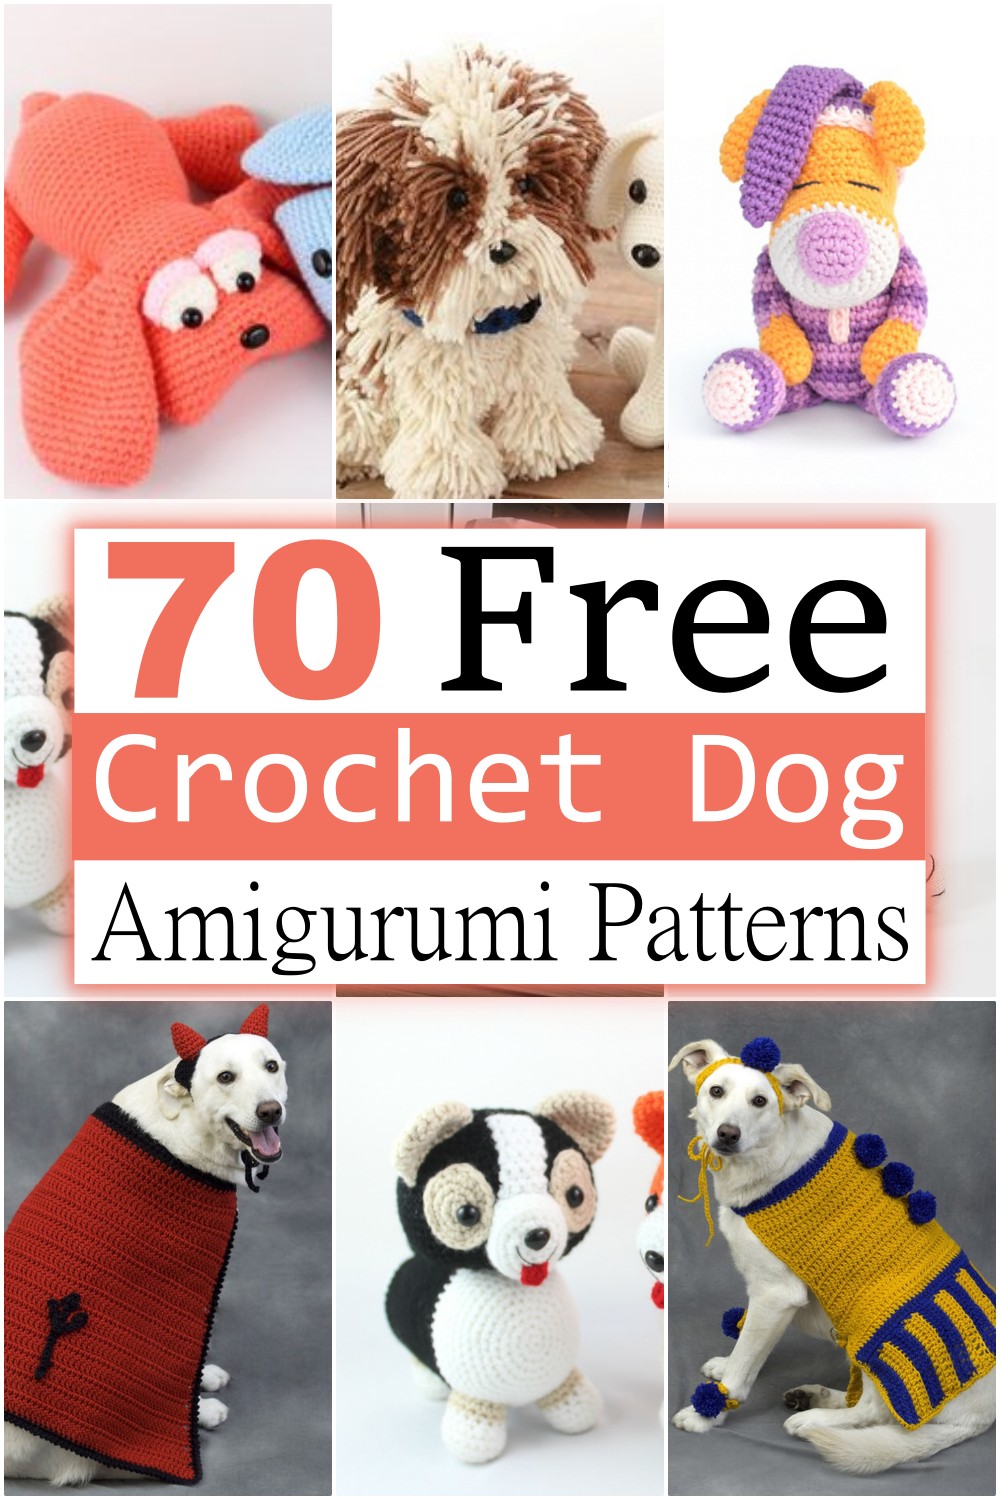 Free Crochet Dog Patterns